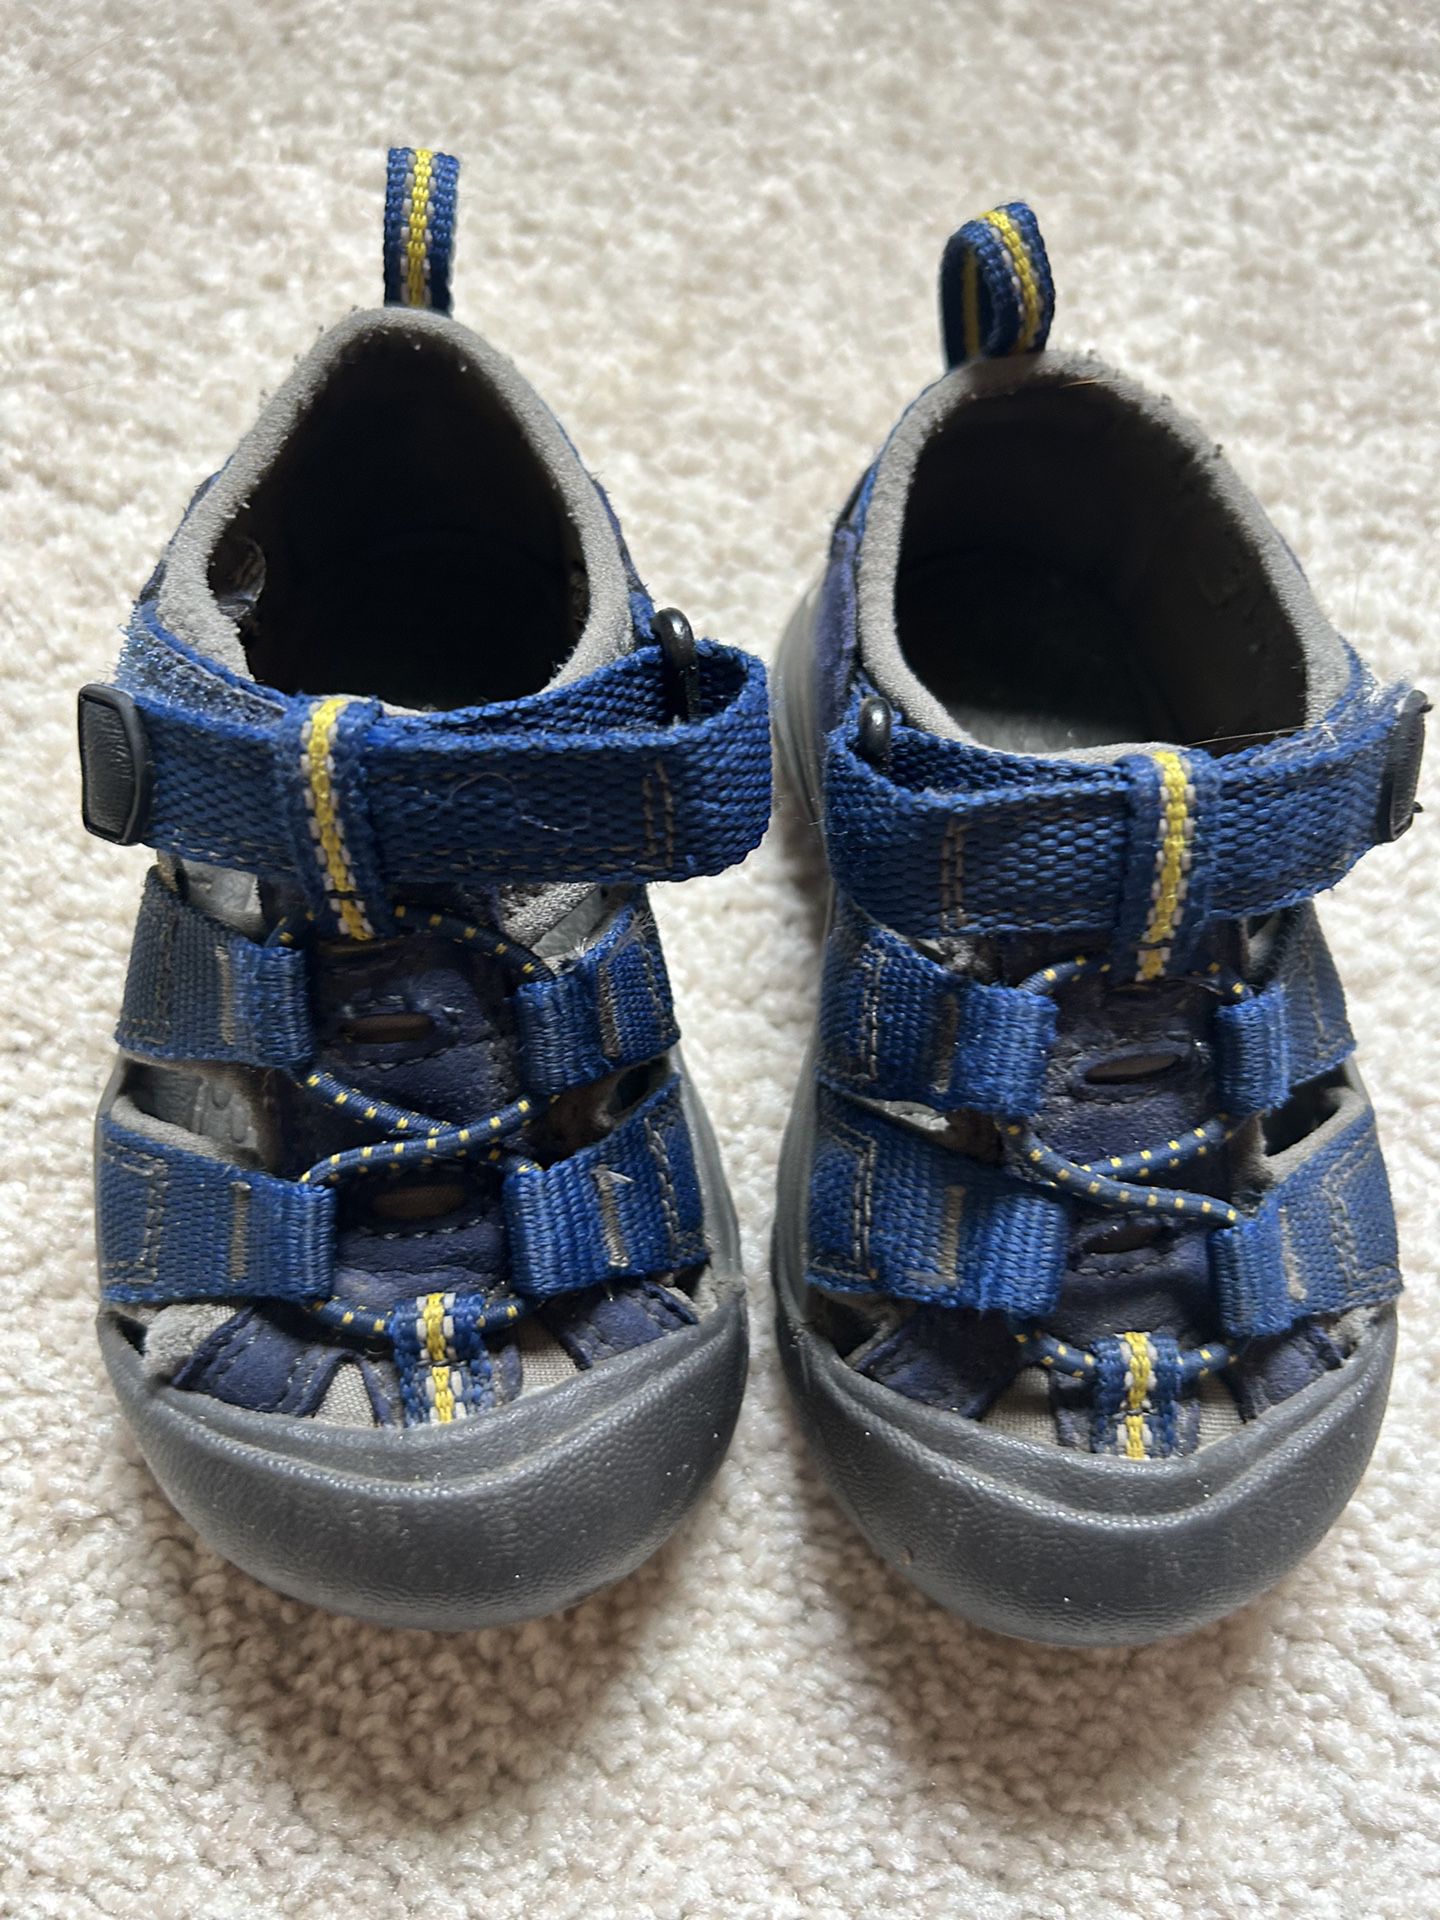 6c Blue Toddler Keens Sandals